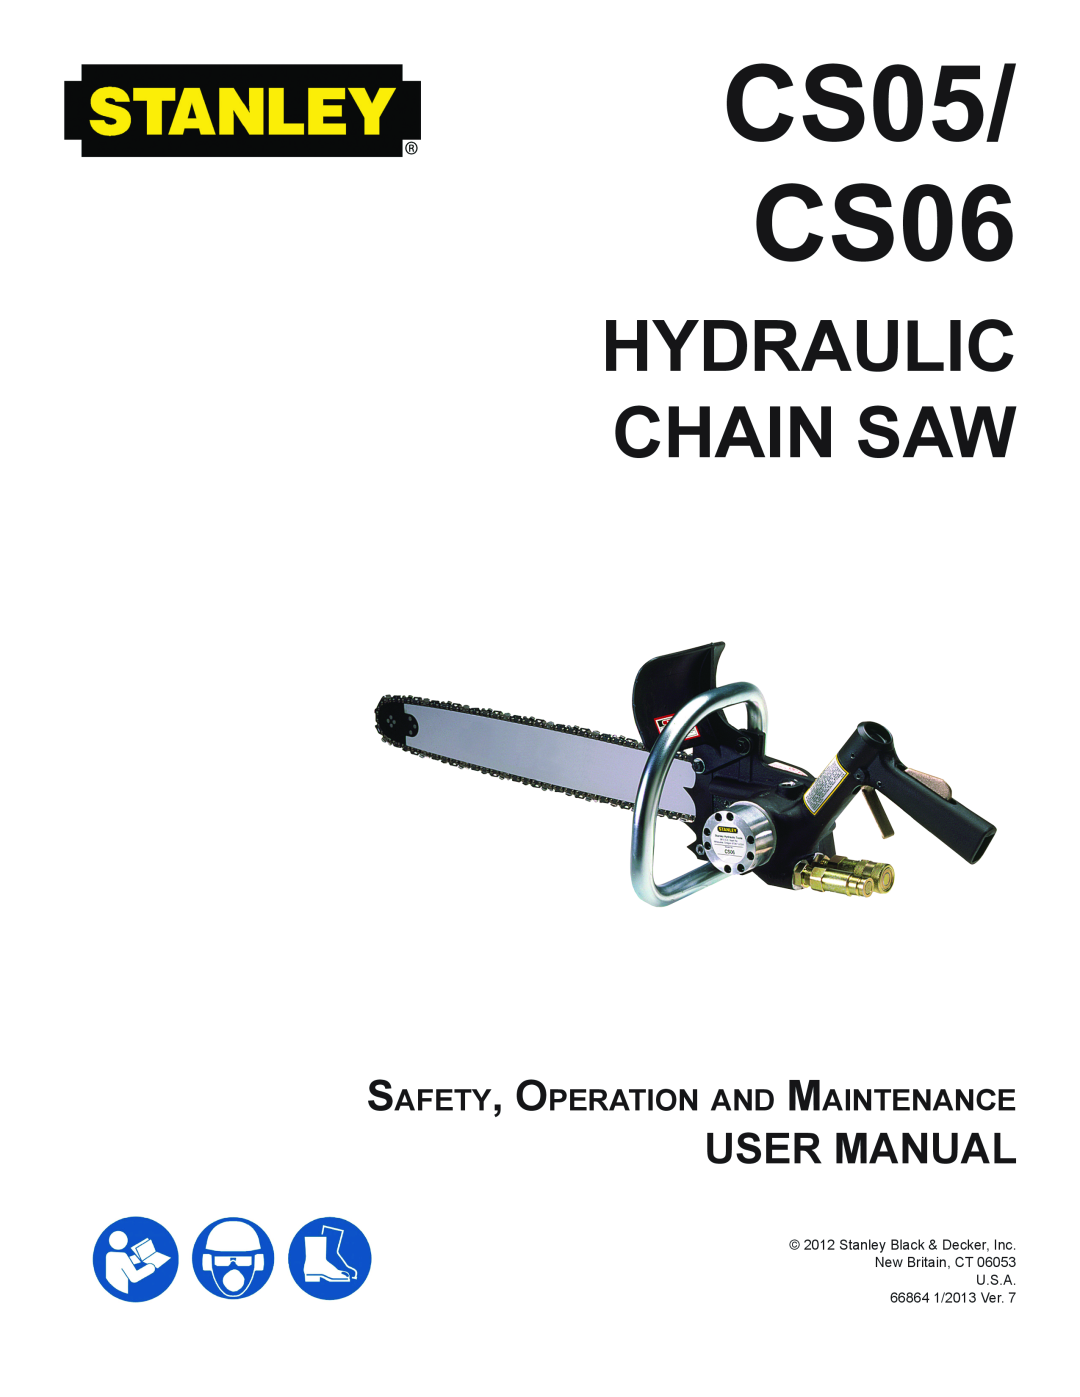 Stanley Black & Decker CS05/CS06 user manual CS05 CS06, Hydraulic Chain Saw, Safety, Operation and Maintenance 